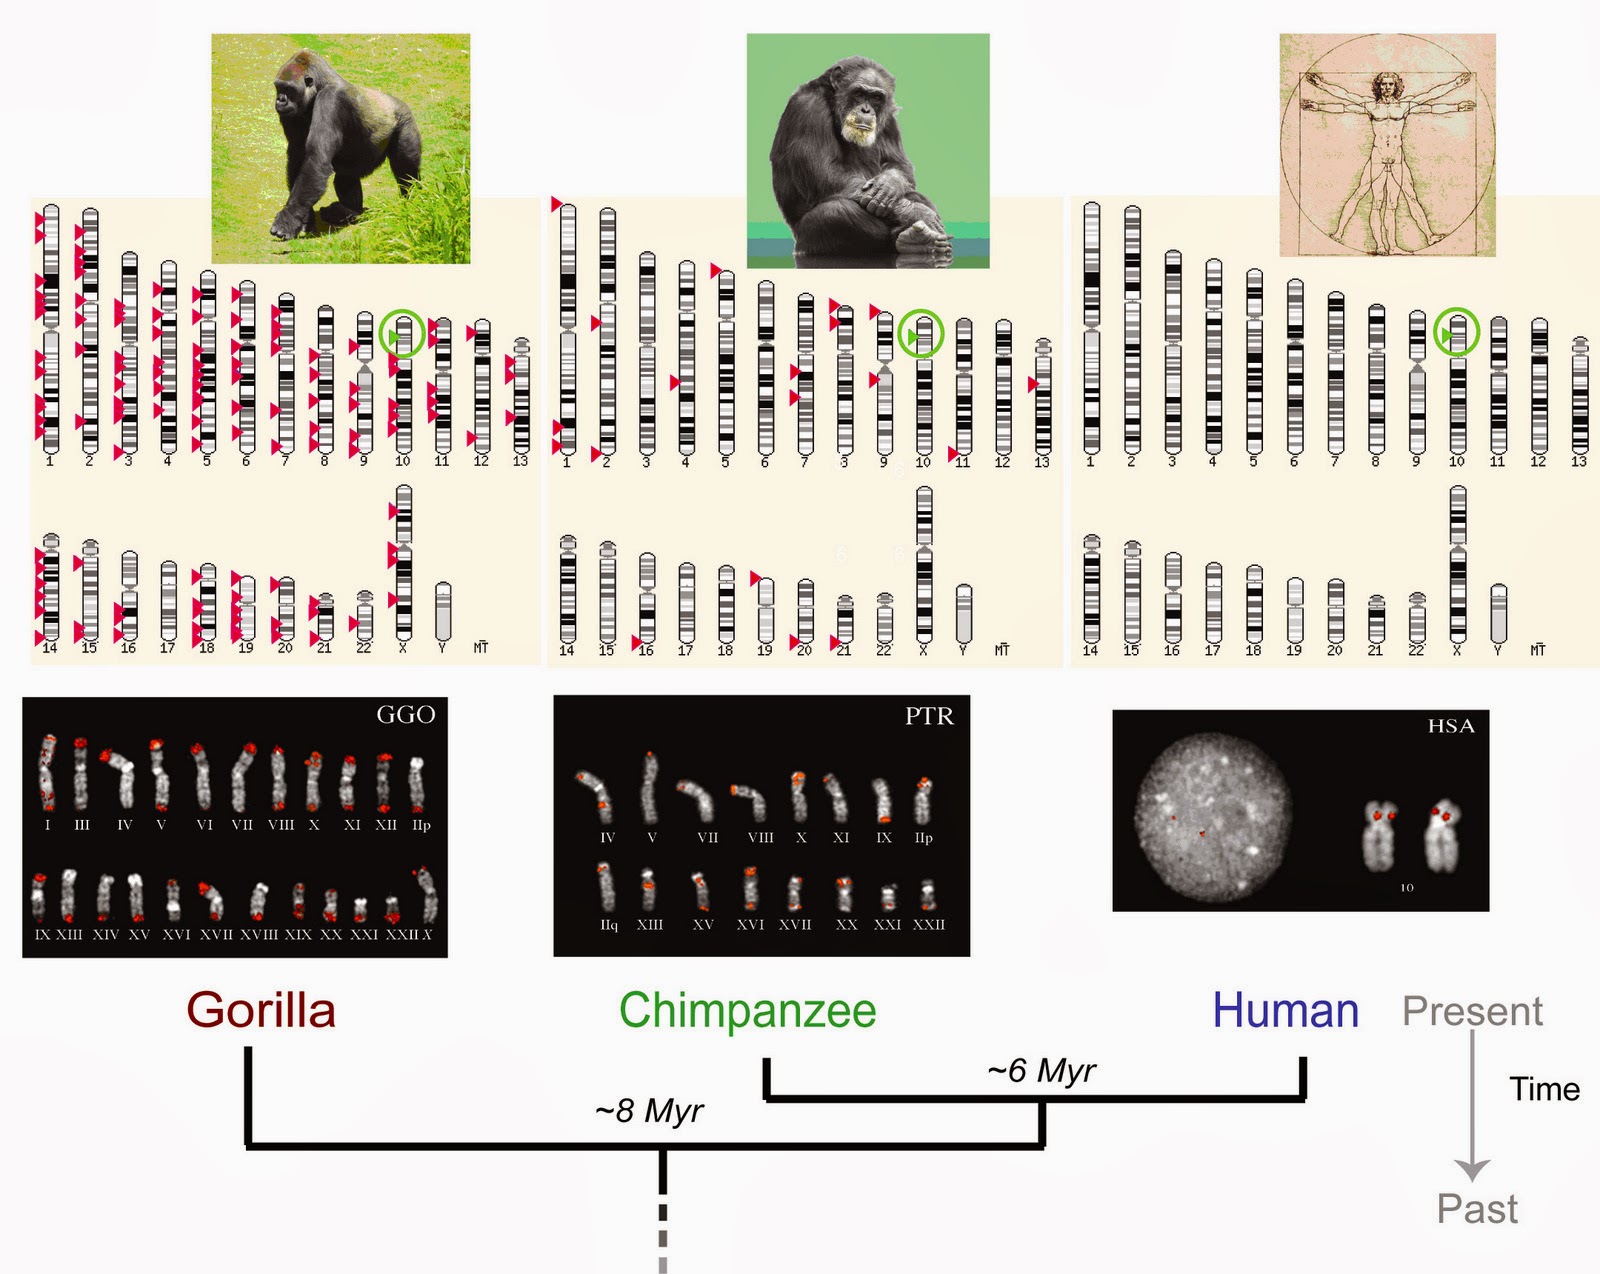 При расшифровке генома мартышки 40. Геном человека и шимпанзе. Хромосомы человека и шимпанзе. Сравнение генома человека и шимпанзе. Сравнение ДНК человека и шимпанзе.